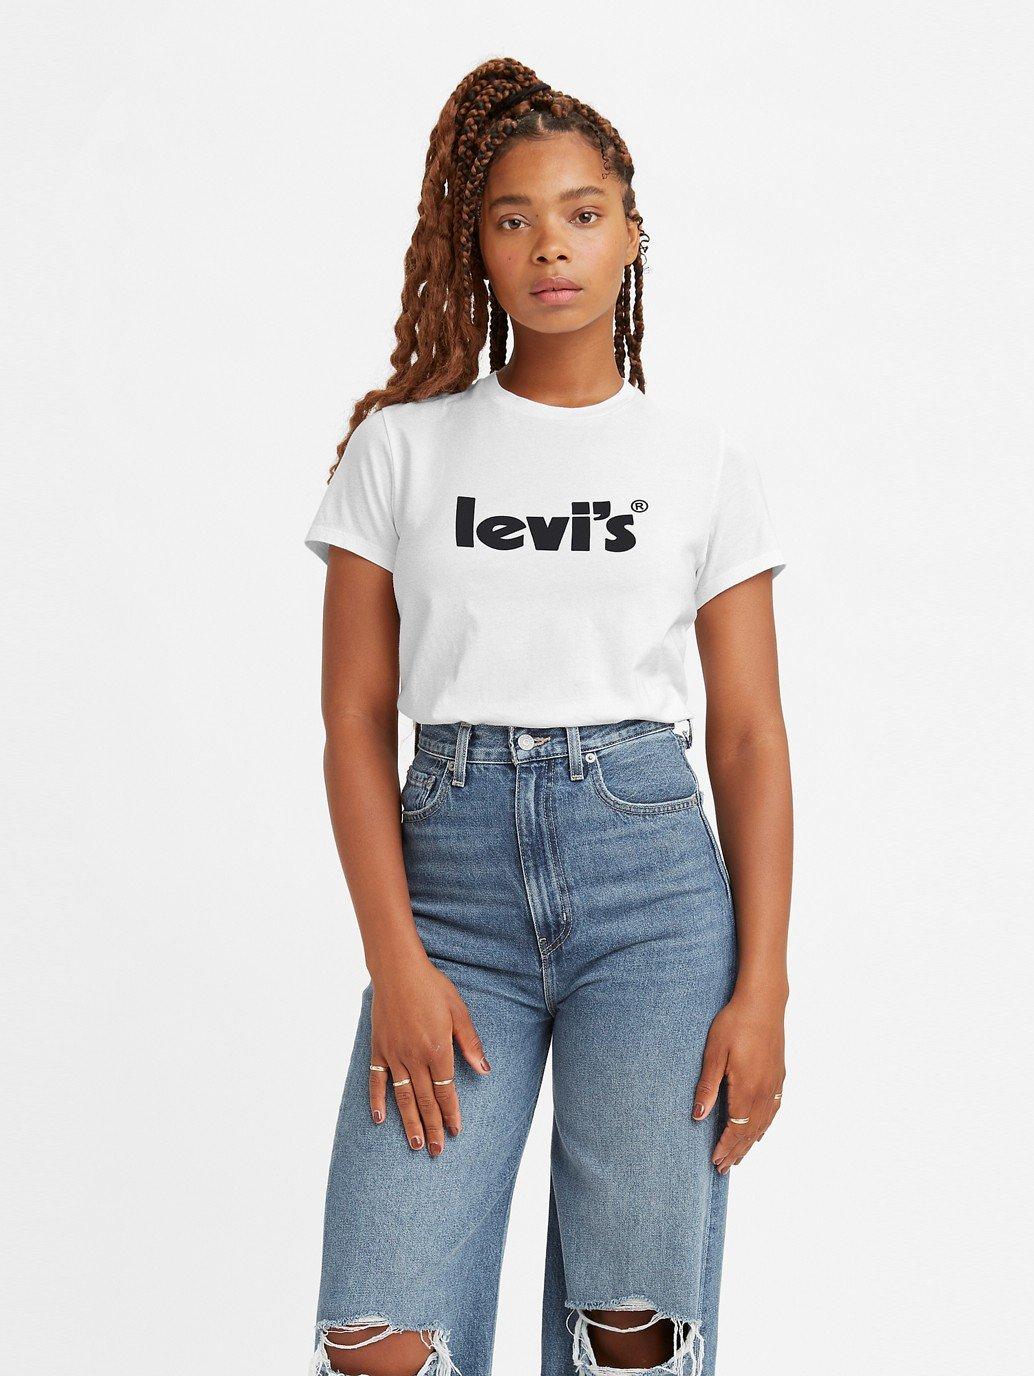 Actualizar 74+ imagen levi’s women’s shirt